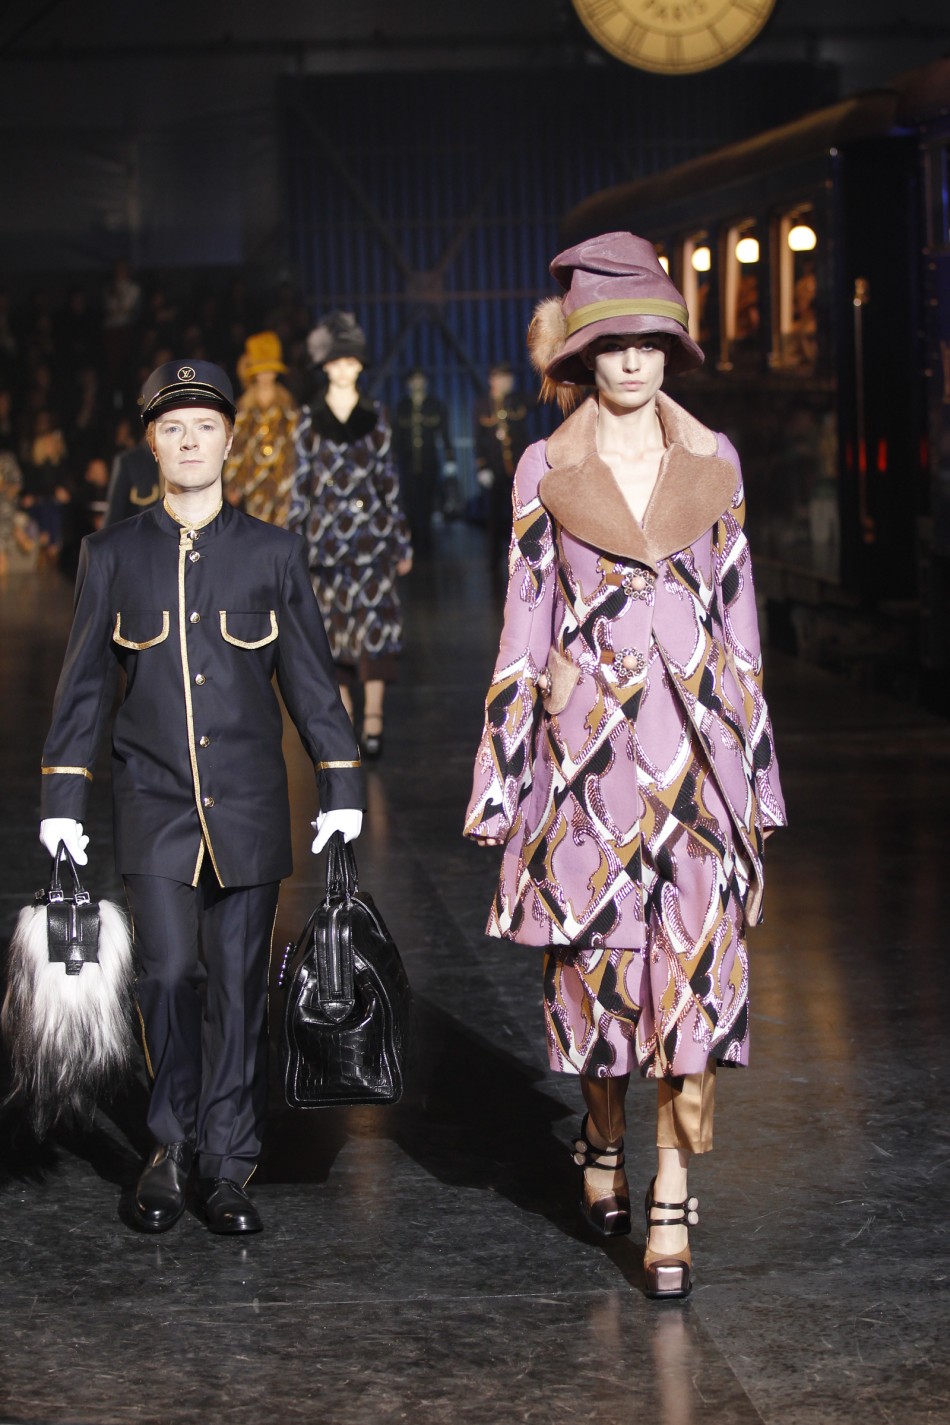 Louis Vuitton Transports Spectators to Edwardian Era of Fashionable Travel